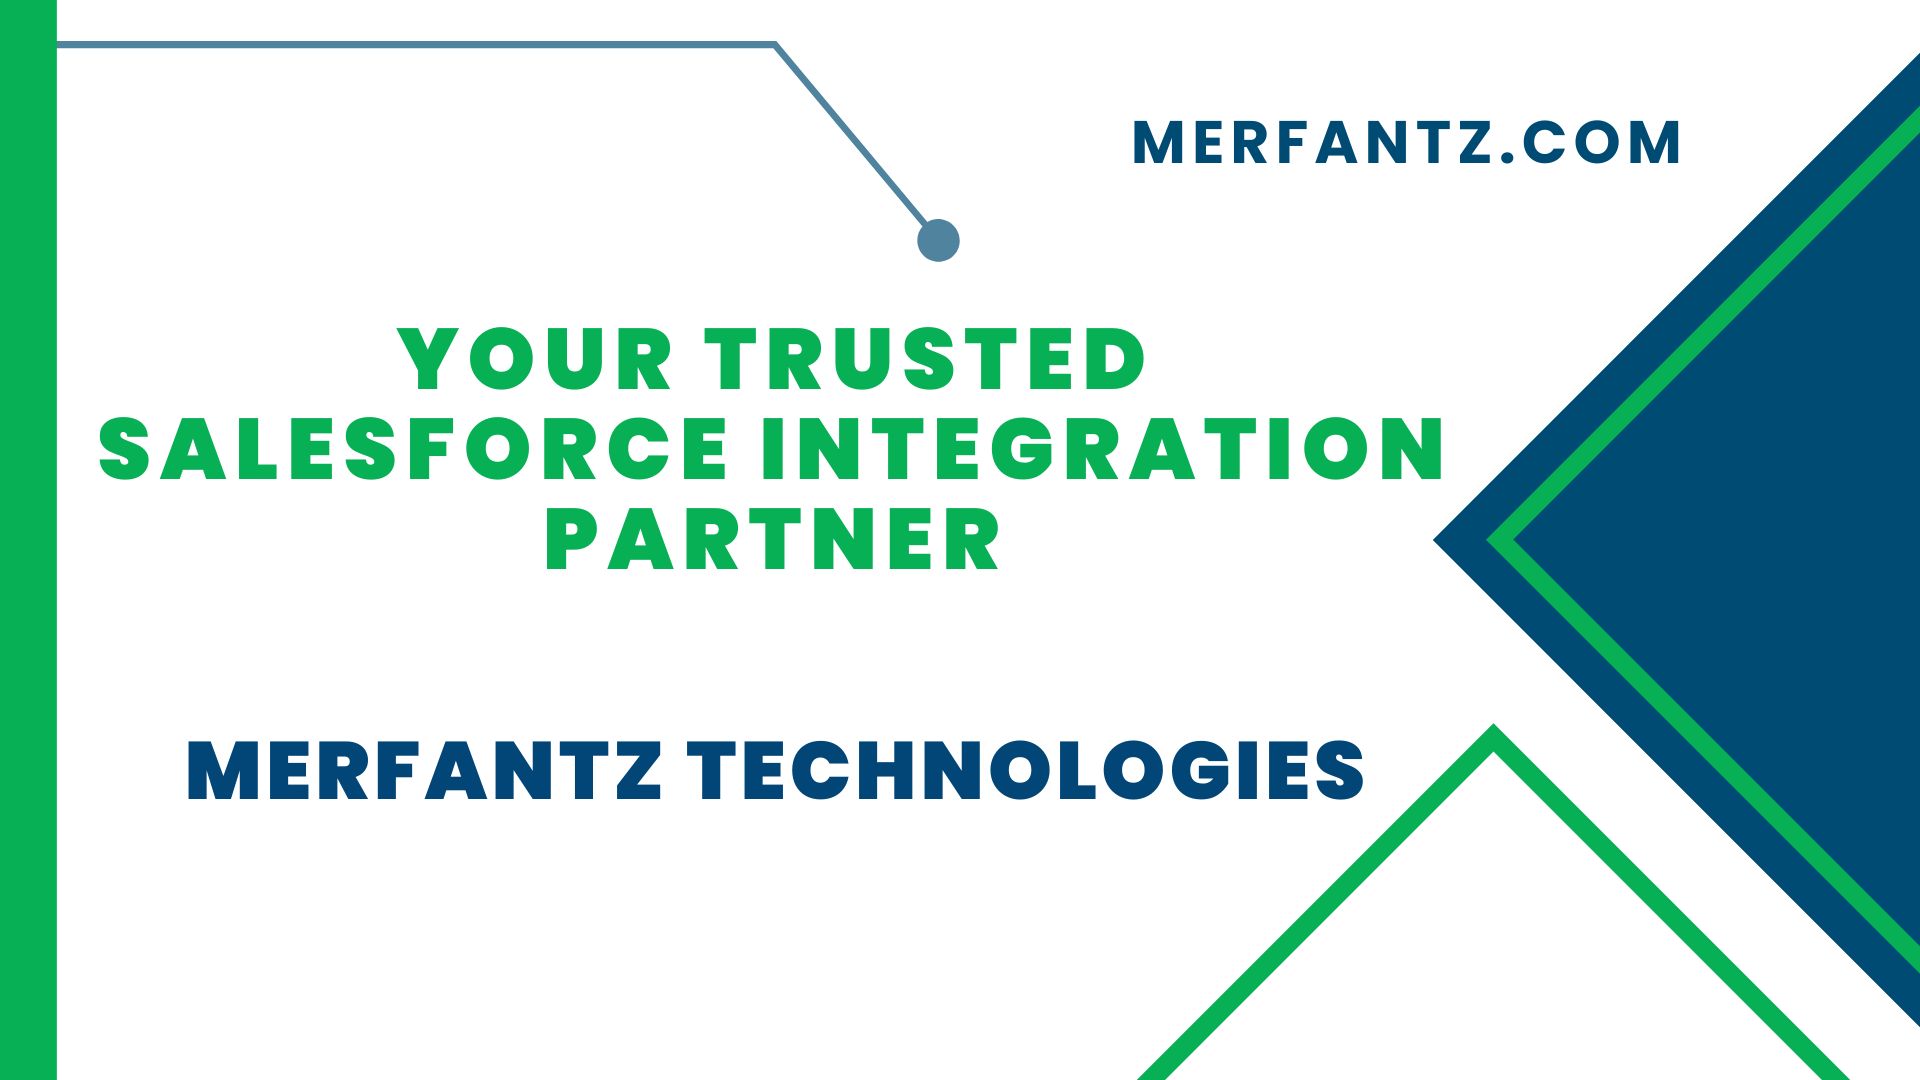 Merfantz Technologies Your Trusted Salesforce Integration Partner